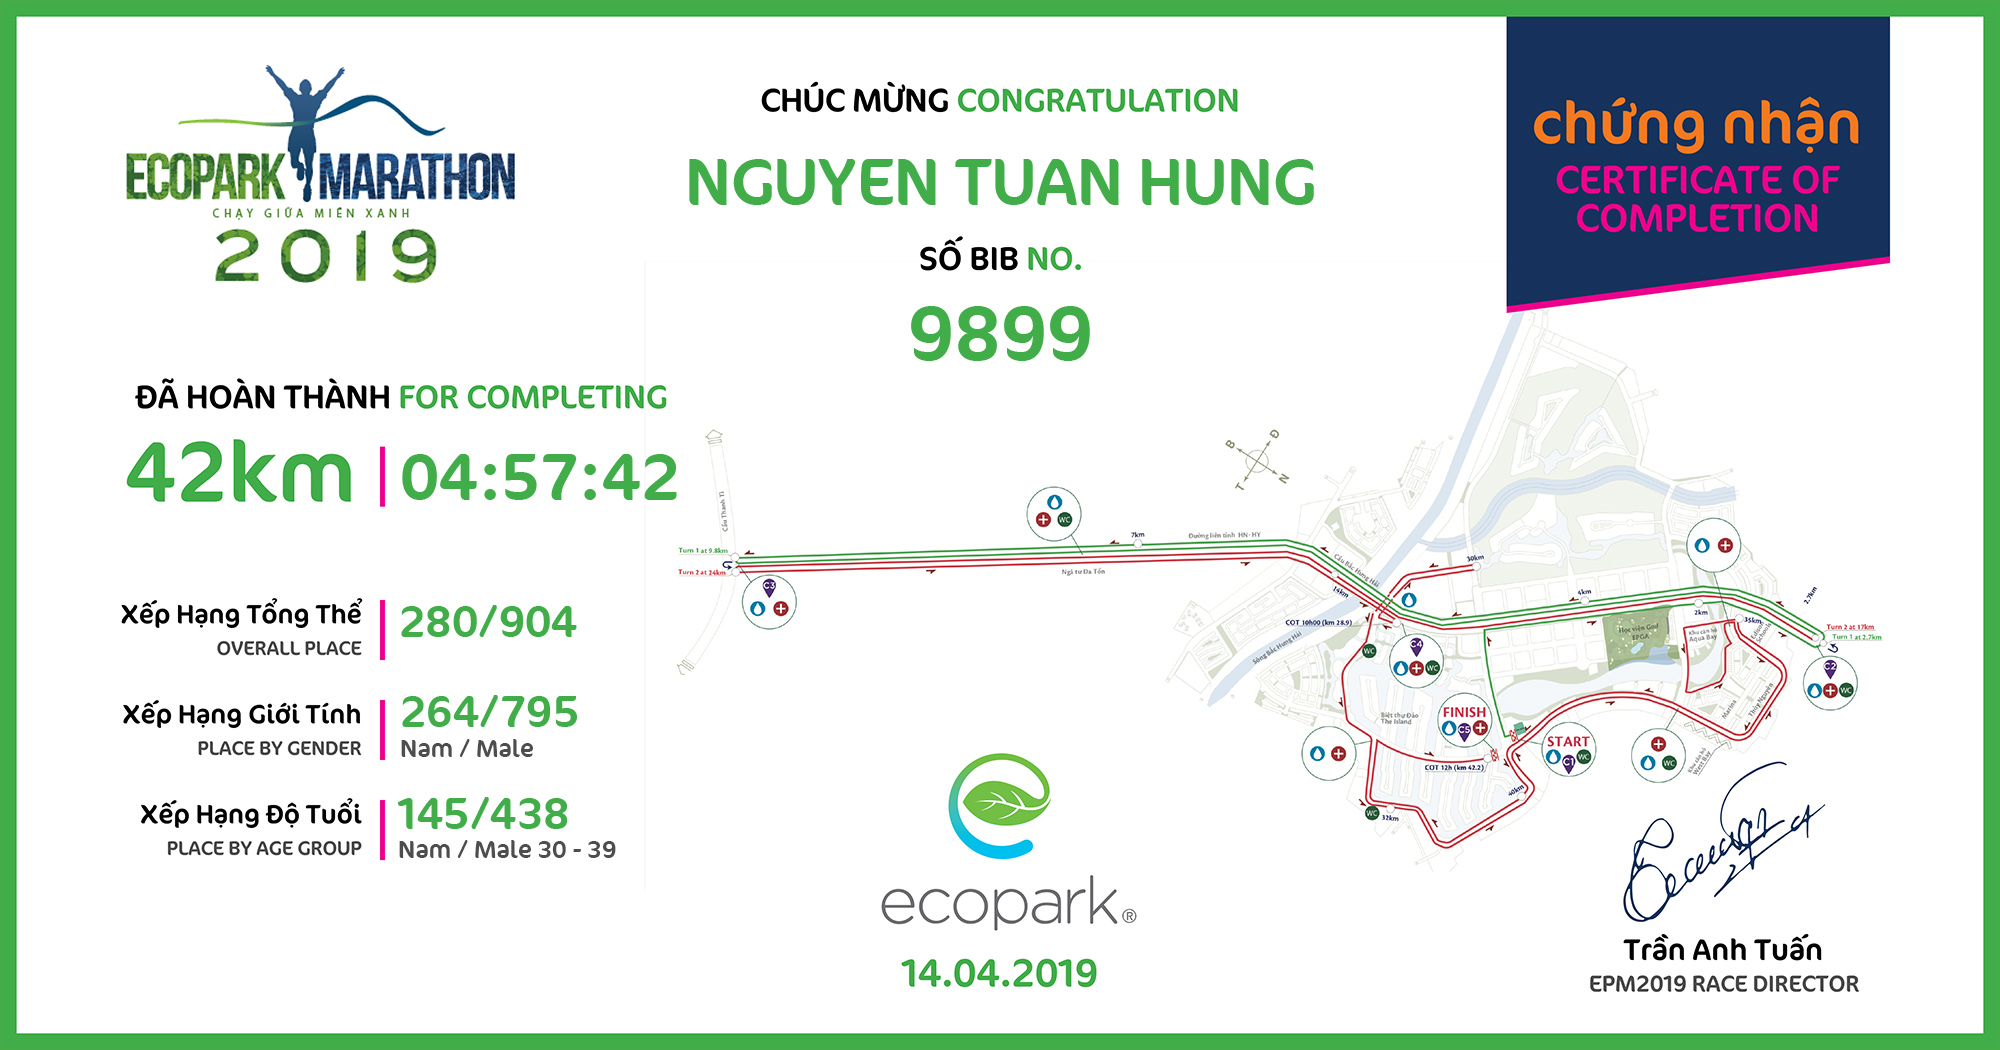 9899 - Nguyen Tuan Hung